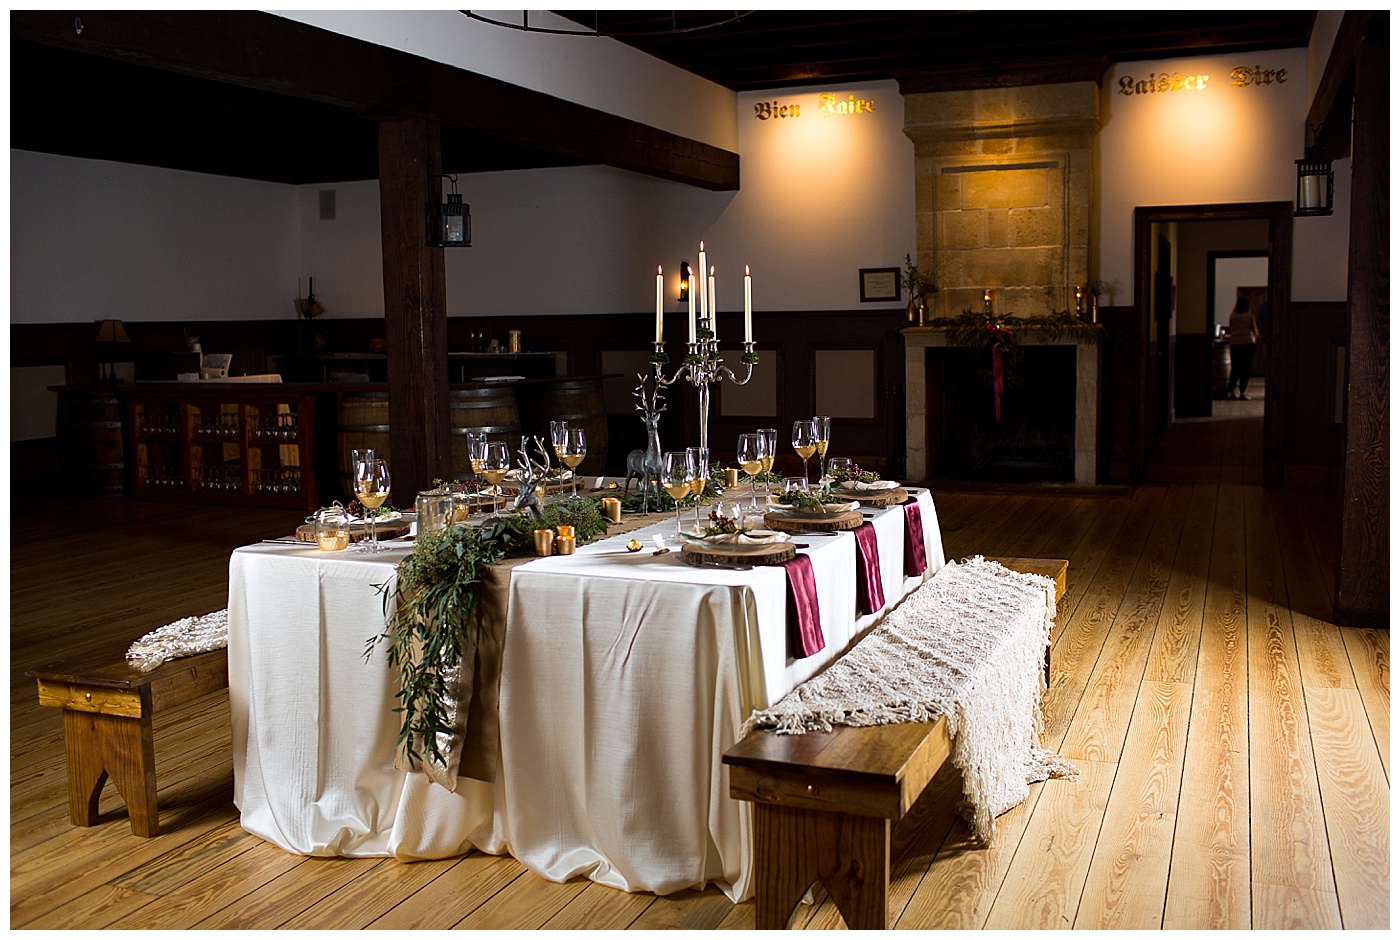 Winter Wonderland Wedding | Williamsburg Winery